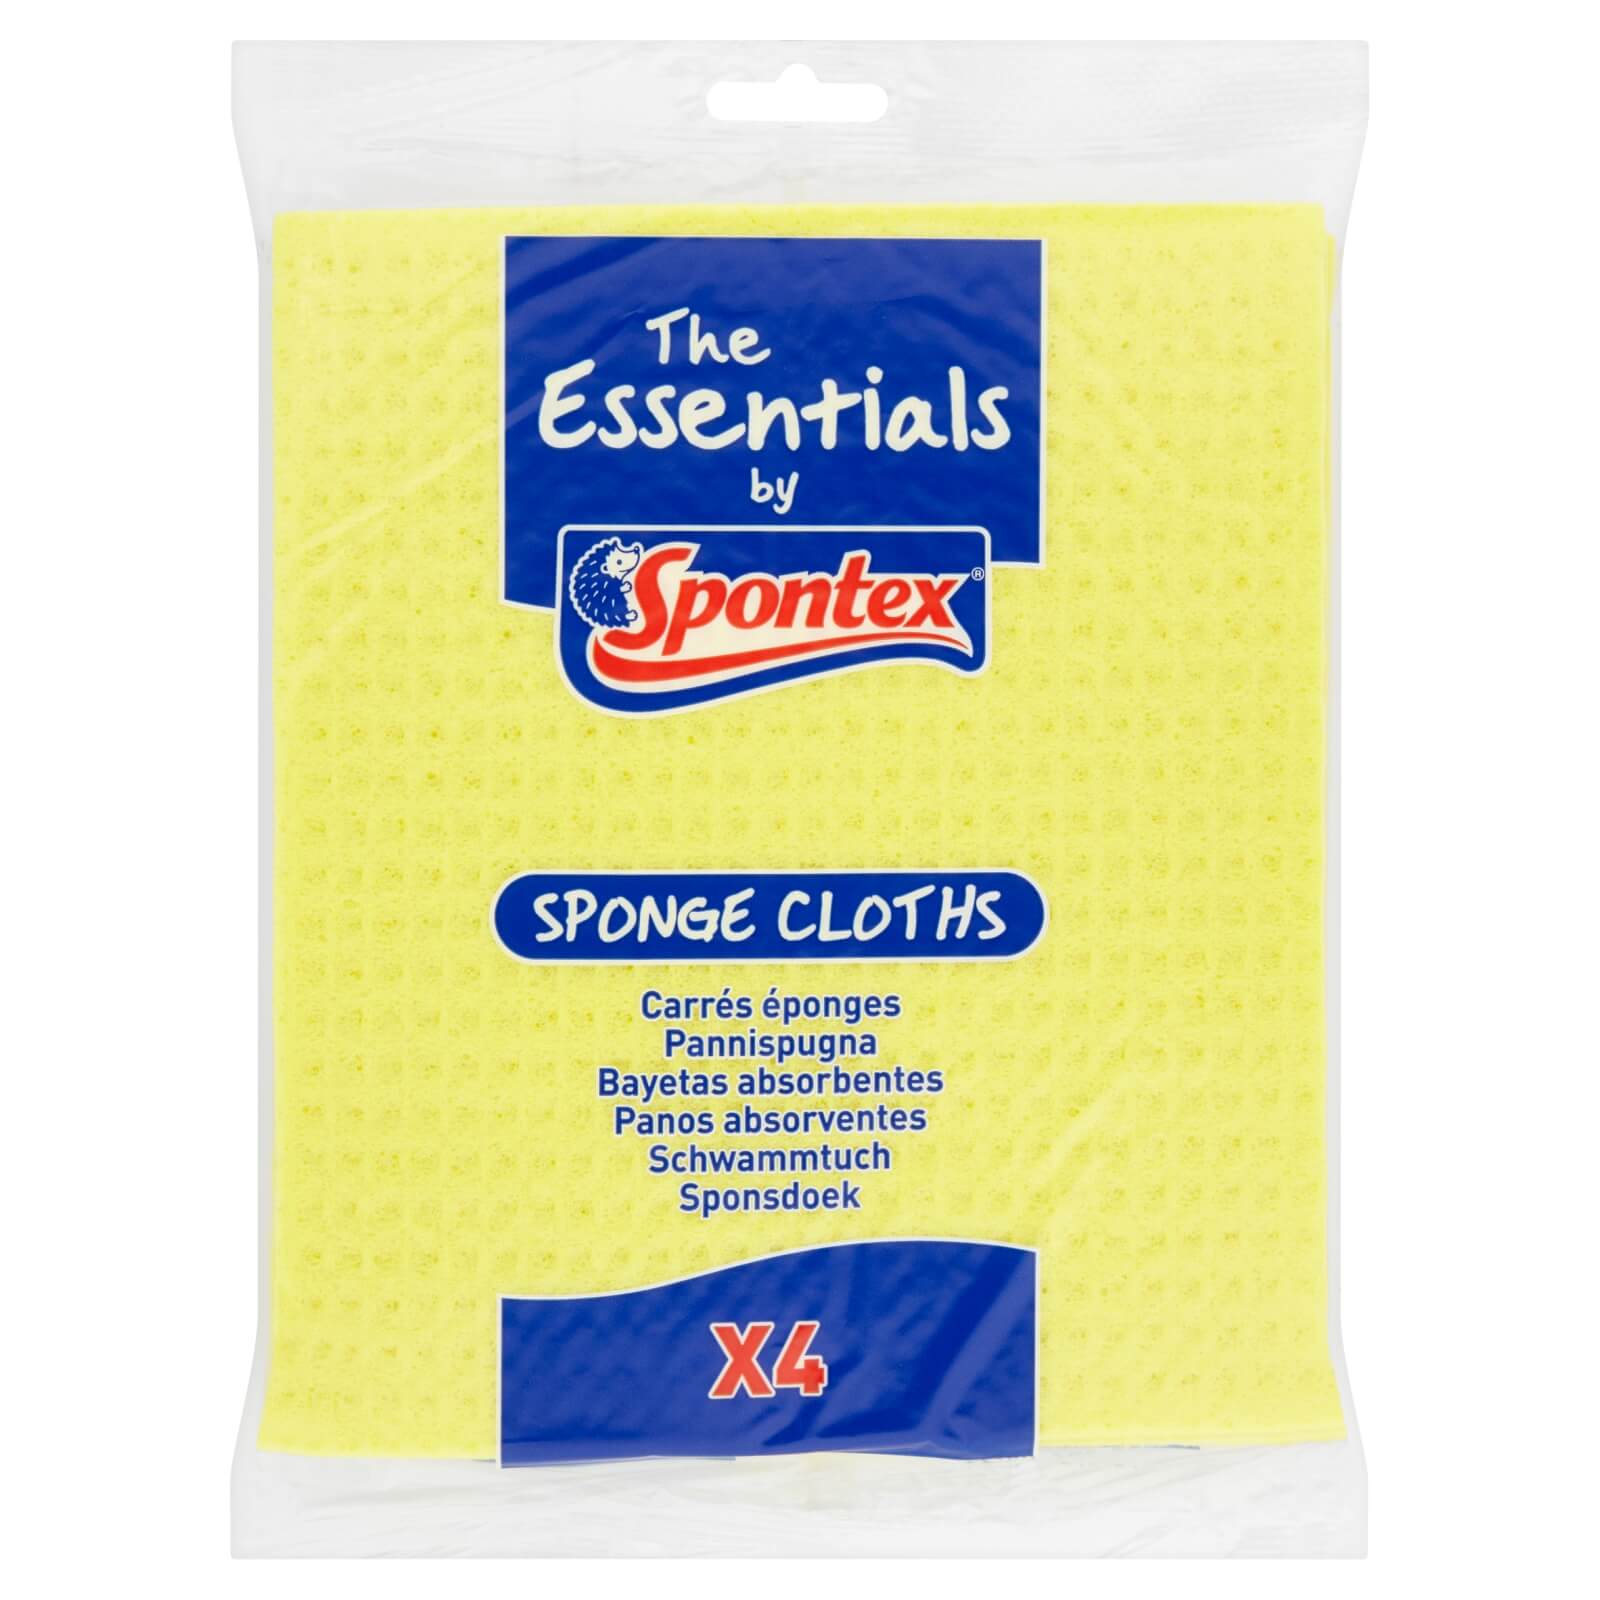 Spontex Essentials Sponge Cloths 4 Pack